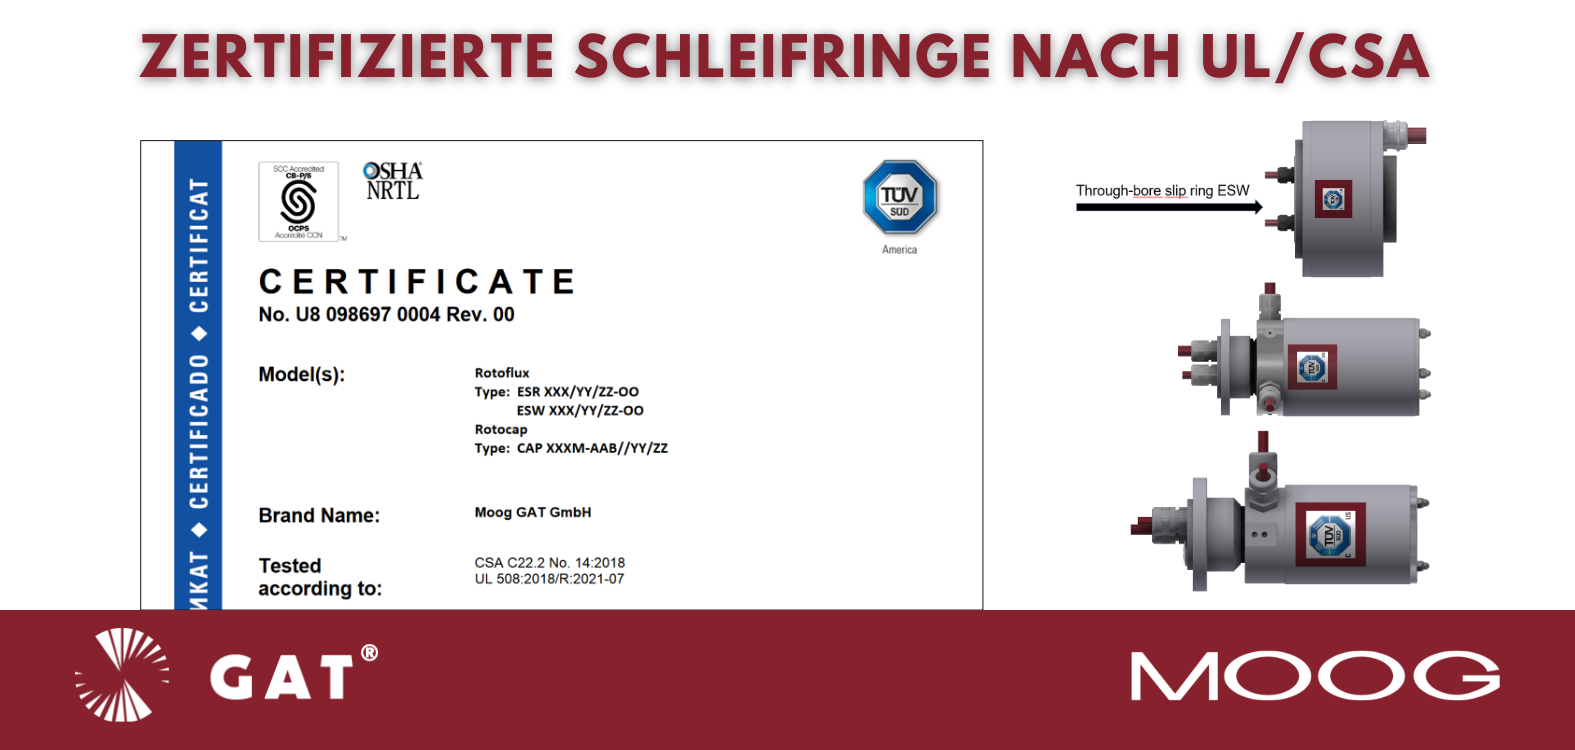 Moog GAT Schleifringe mit UL/CSA Zertifikat